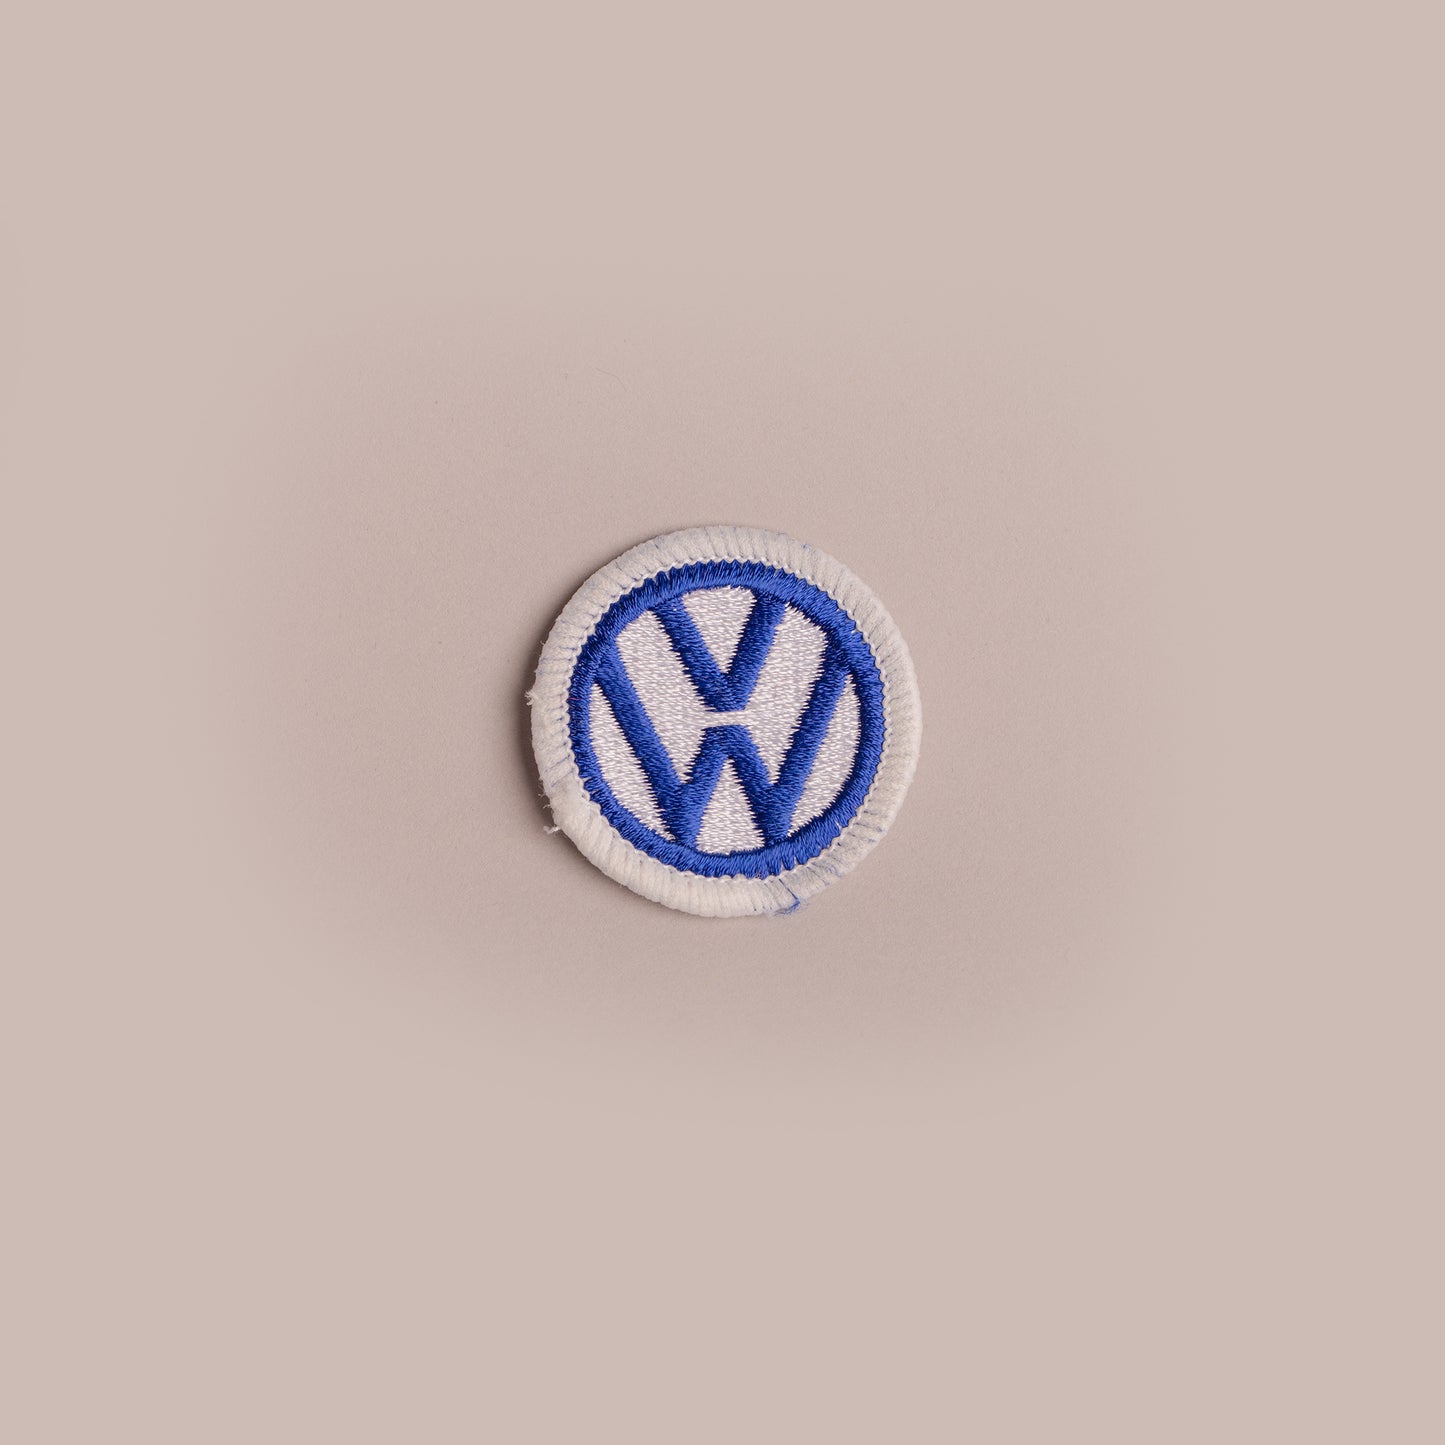 Vintage Patch - Volkswagen VW